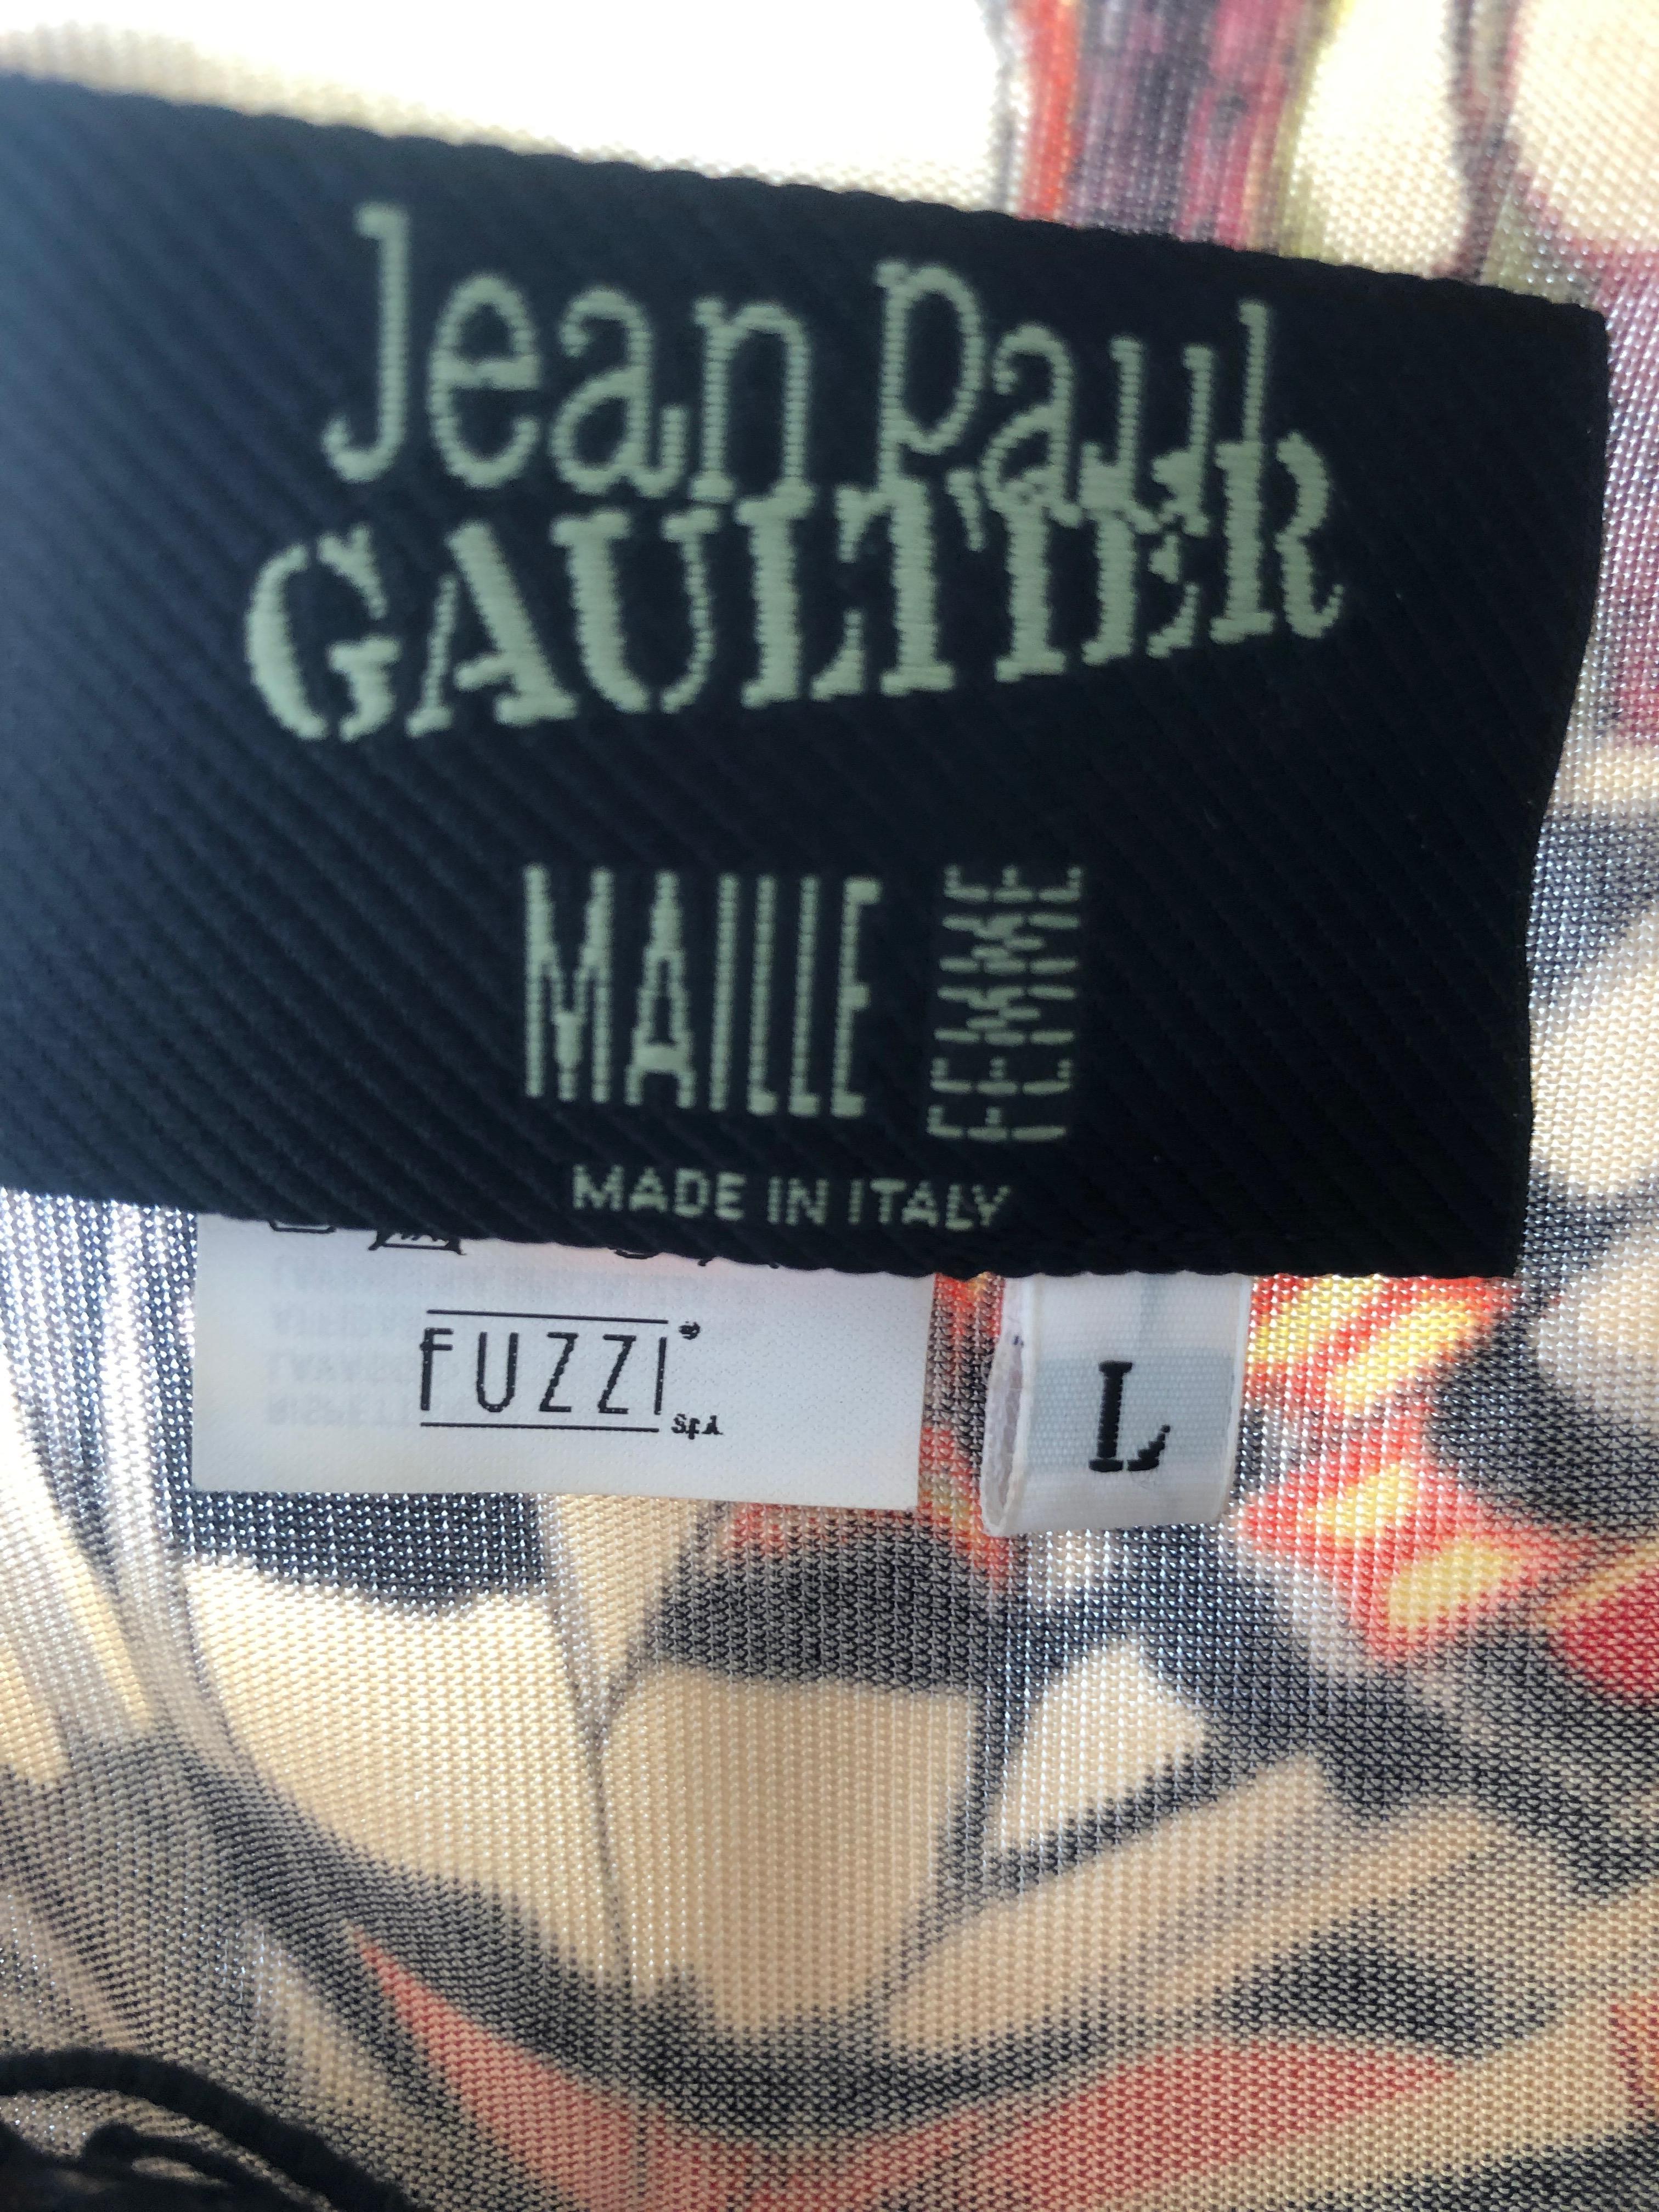 Jean Paul Gaultier Maille Feme Low Cut Butterfly Print Dress w Lace Up Details L For Sale 3